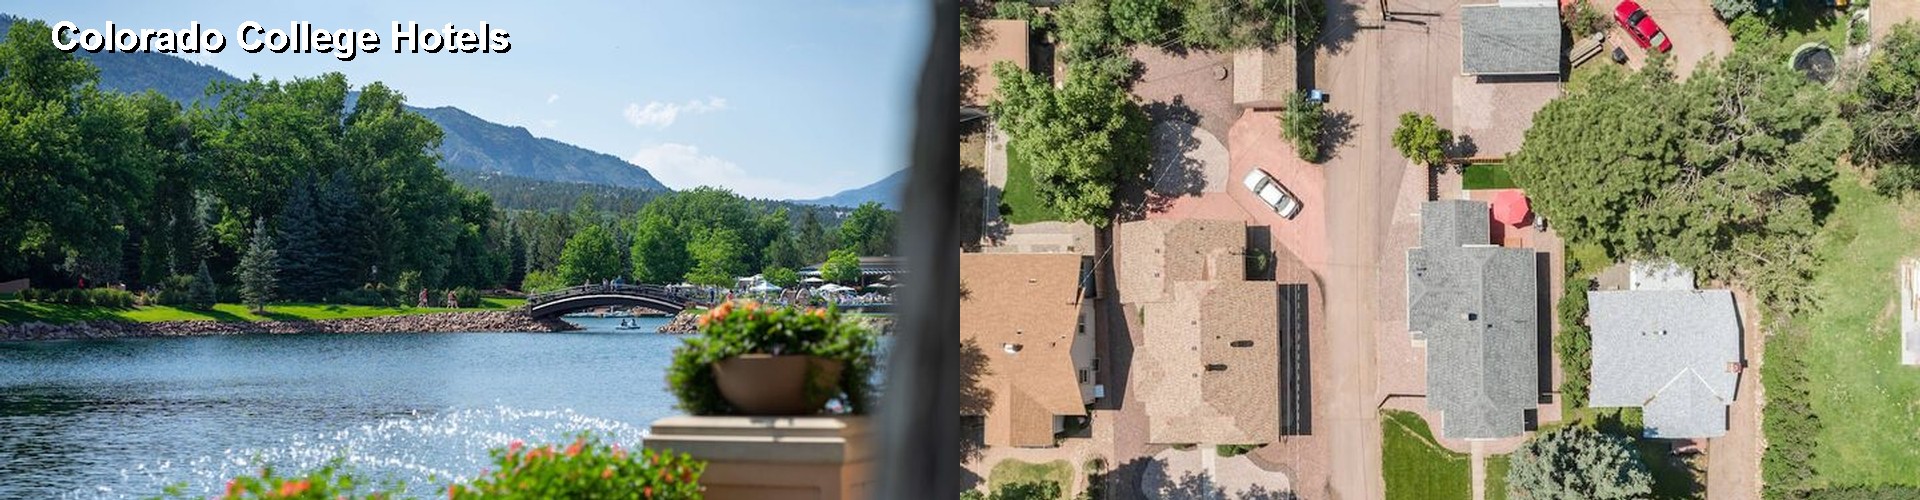 5 Best Hotels near Colorado College